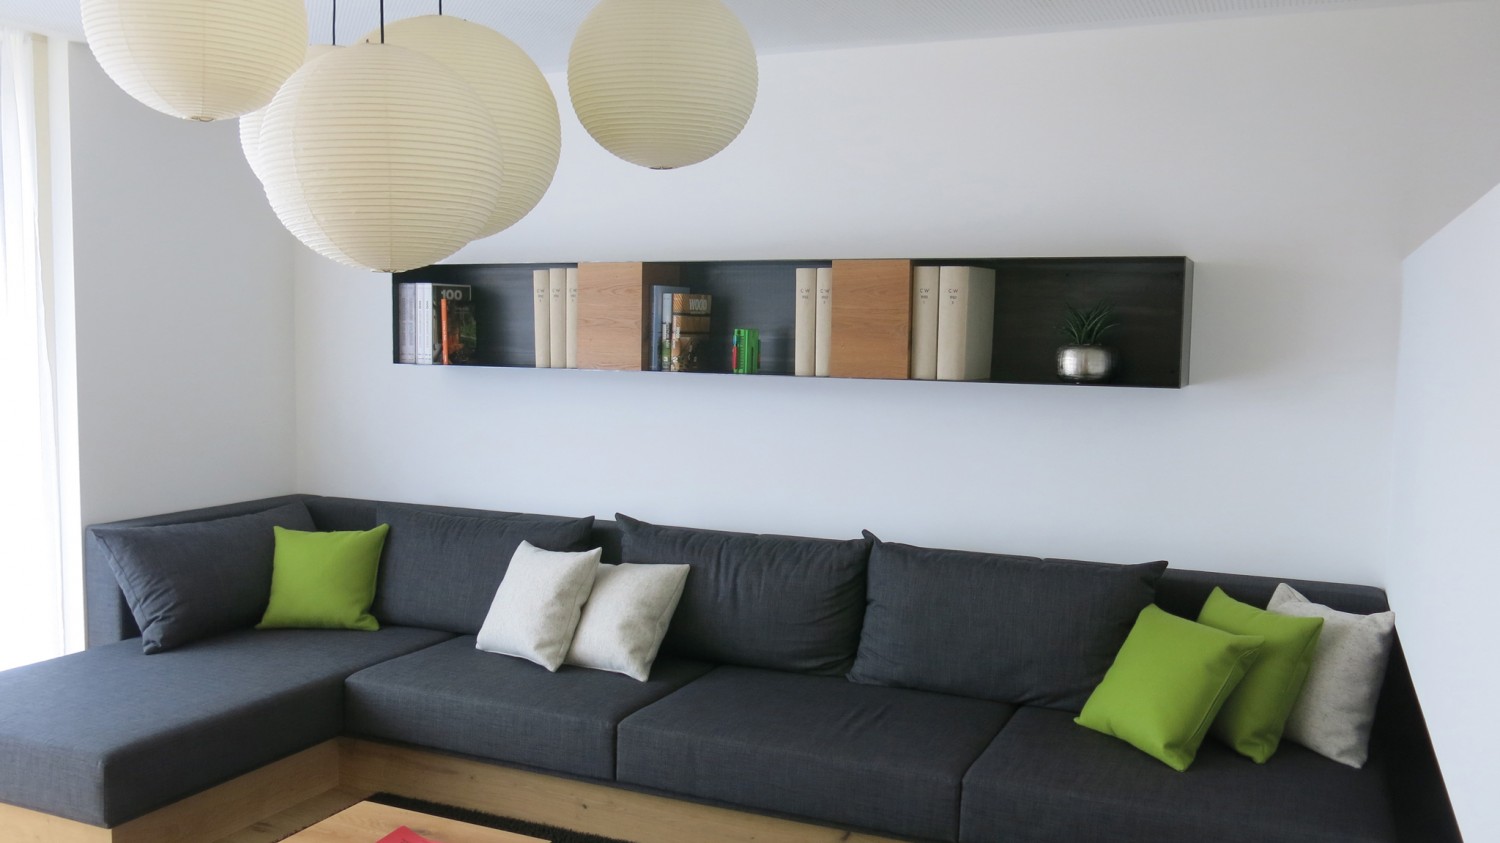 Smart Home-Installation Loxone Smart ShowHouse im Test, Bild 3